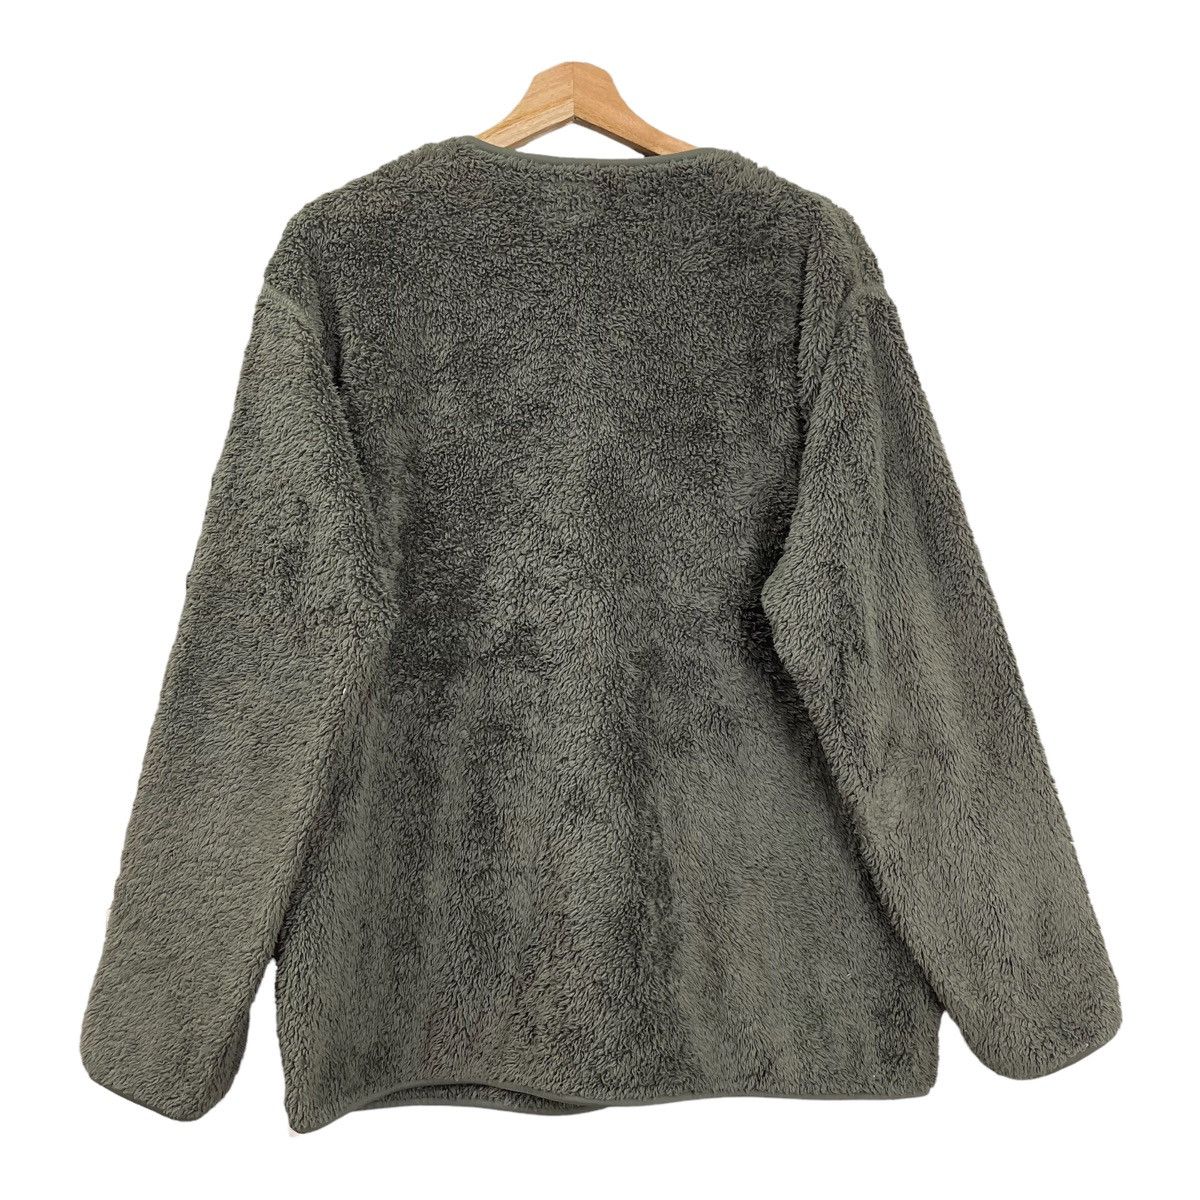 Uniqlo Engineered Garments Pullover Fleece Size L - 7